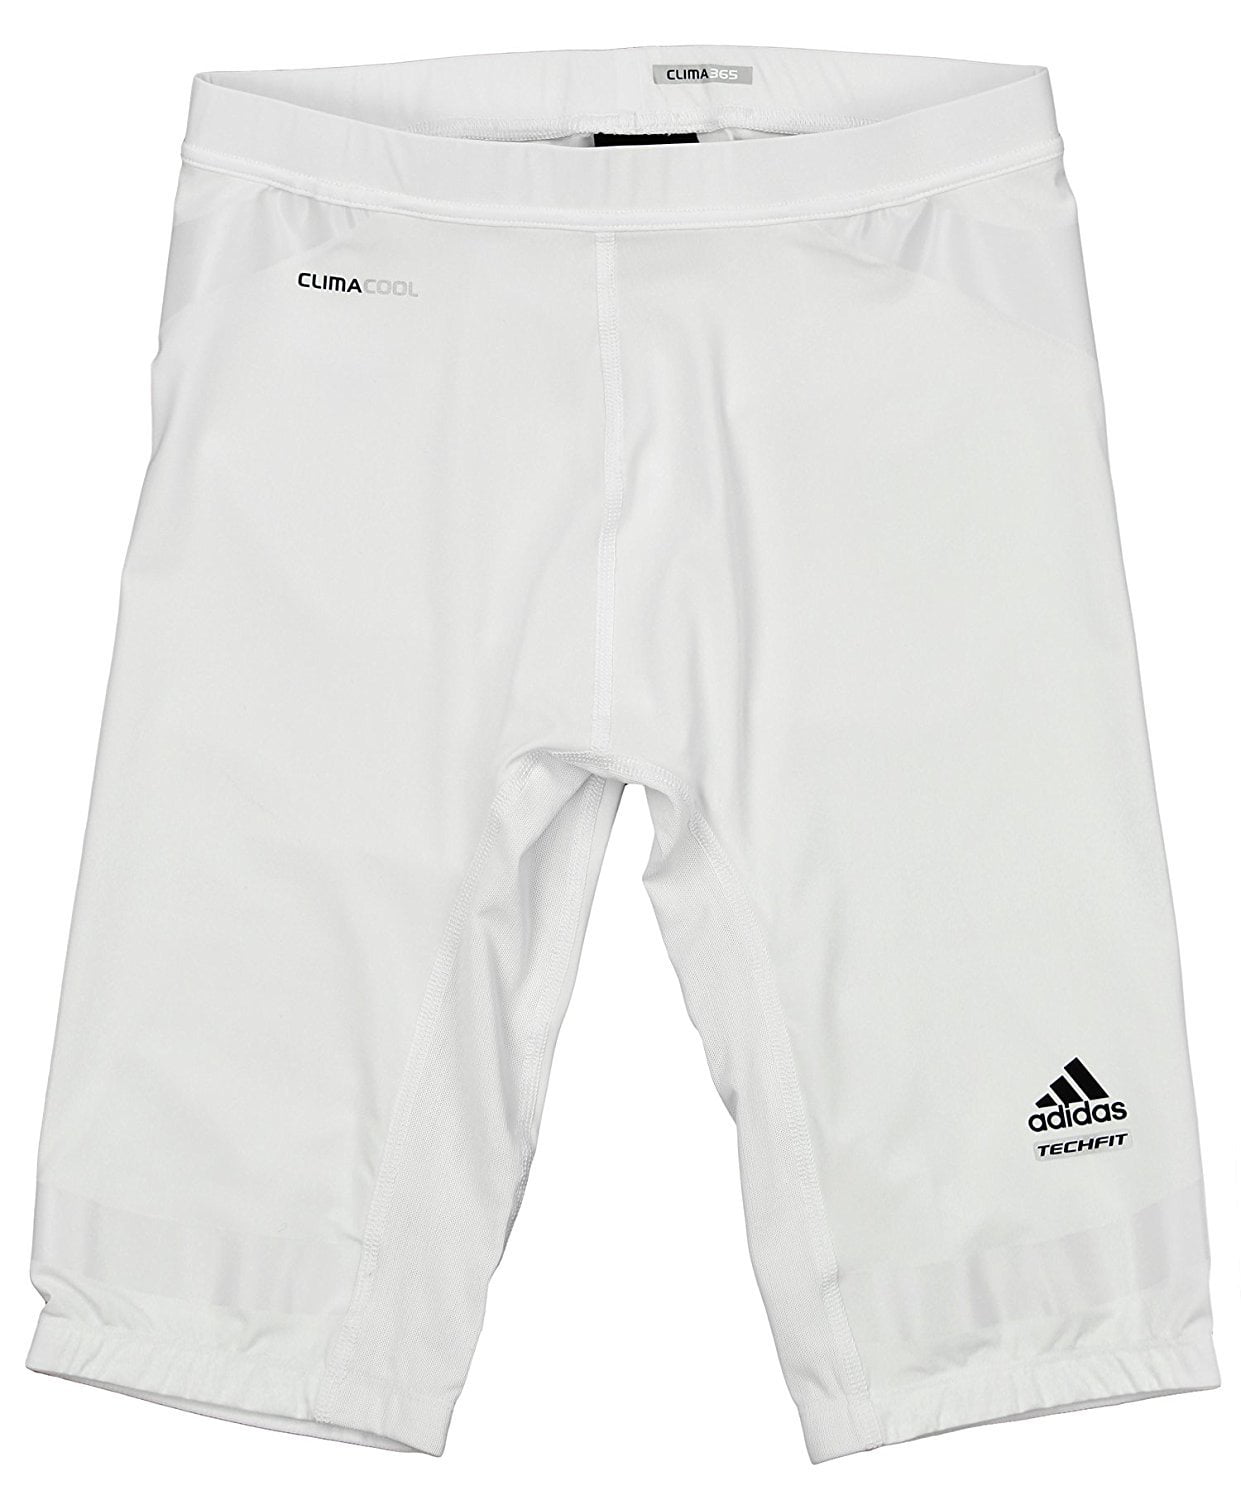 adidas techfit powerweb shorts